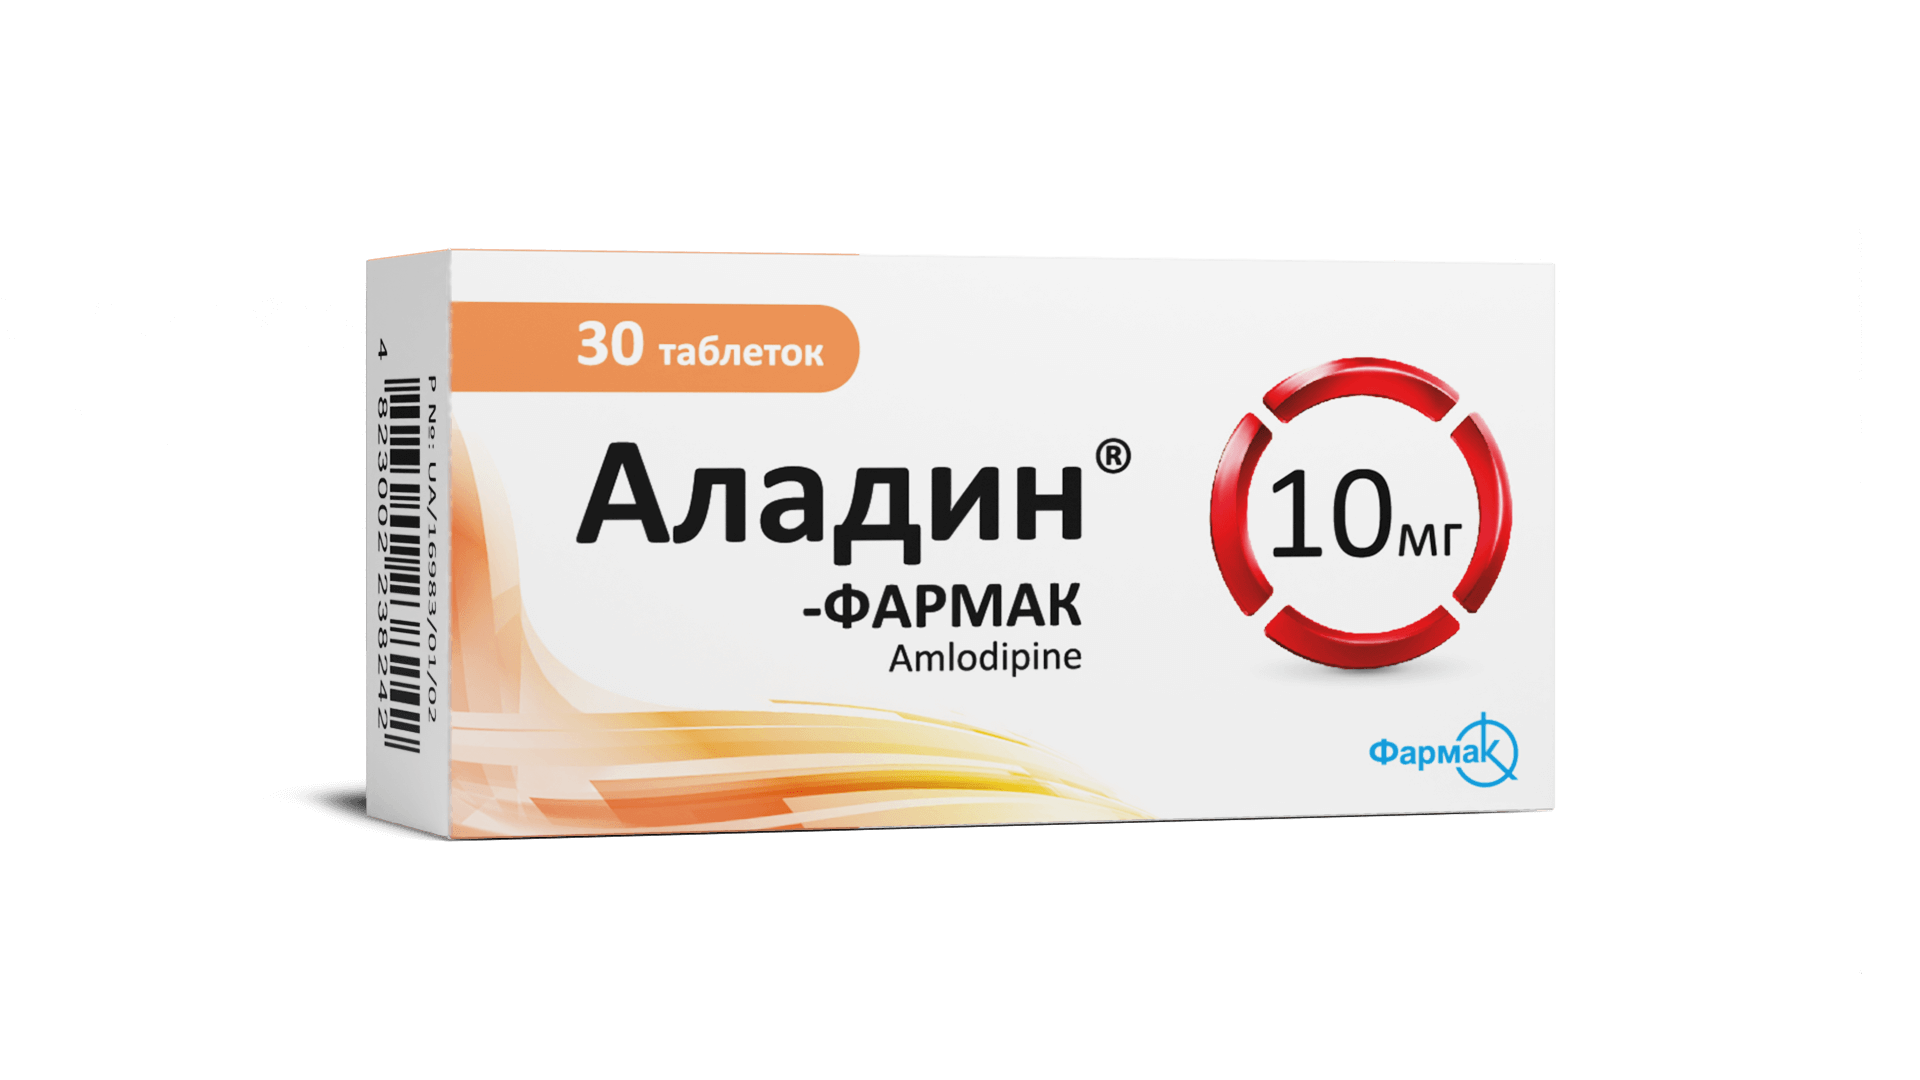 Аладин – Фармак 10 мг (1)